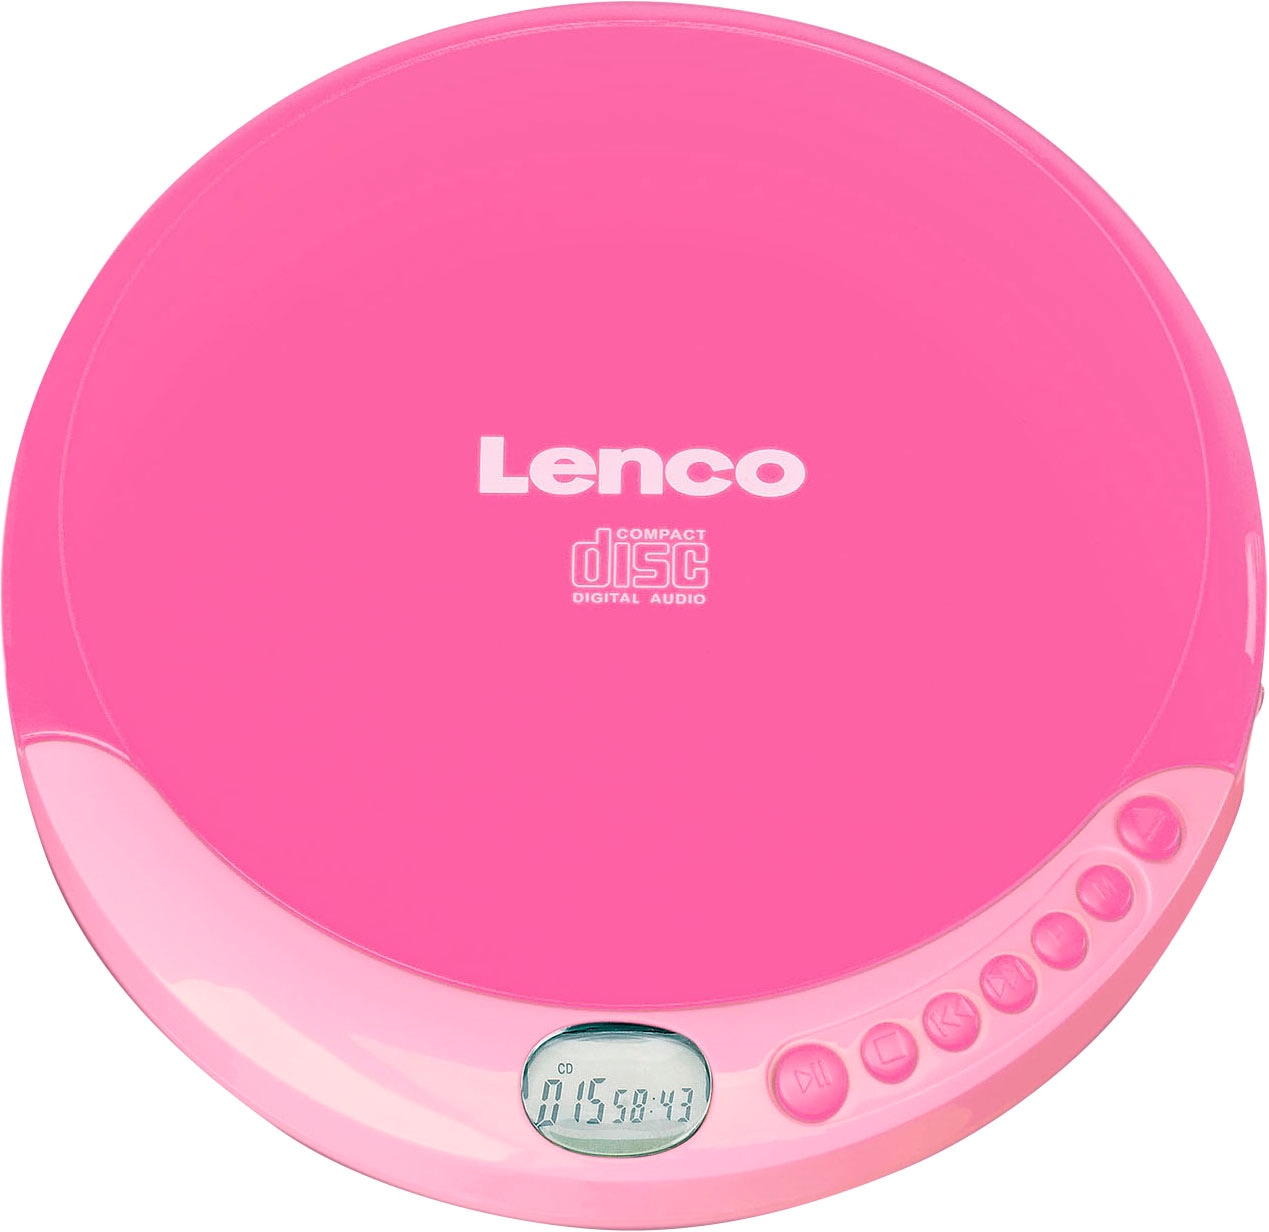 OTTO kaufen jetzt bei »CD-011« CD-Player Lenco